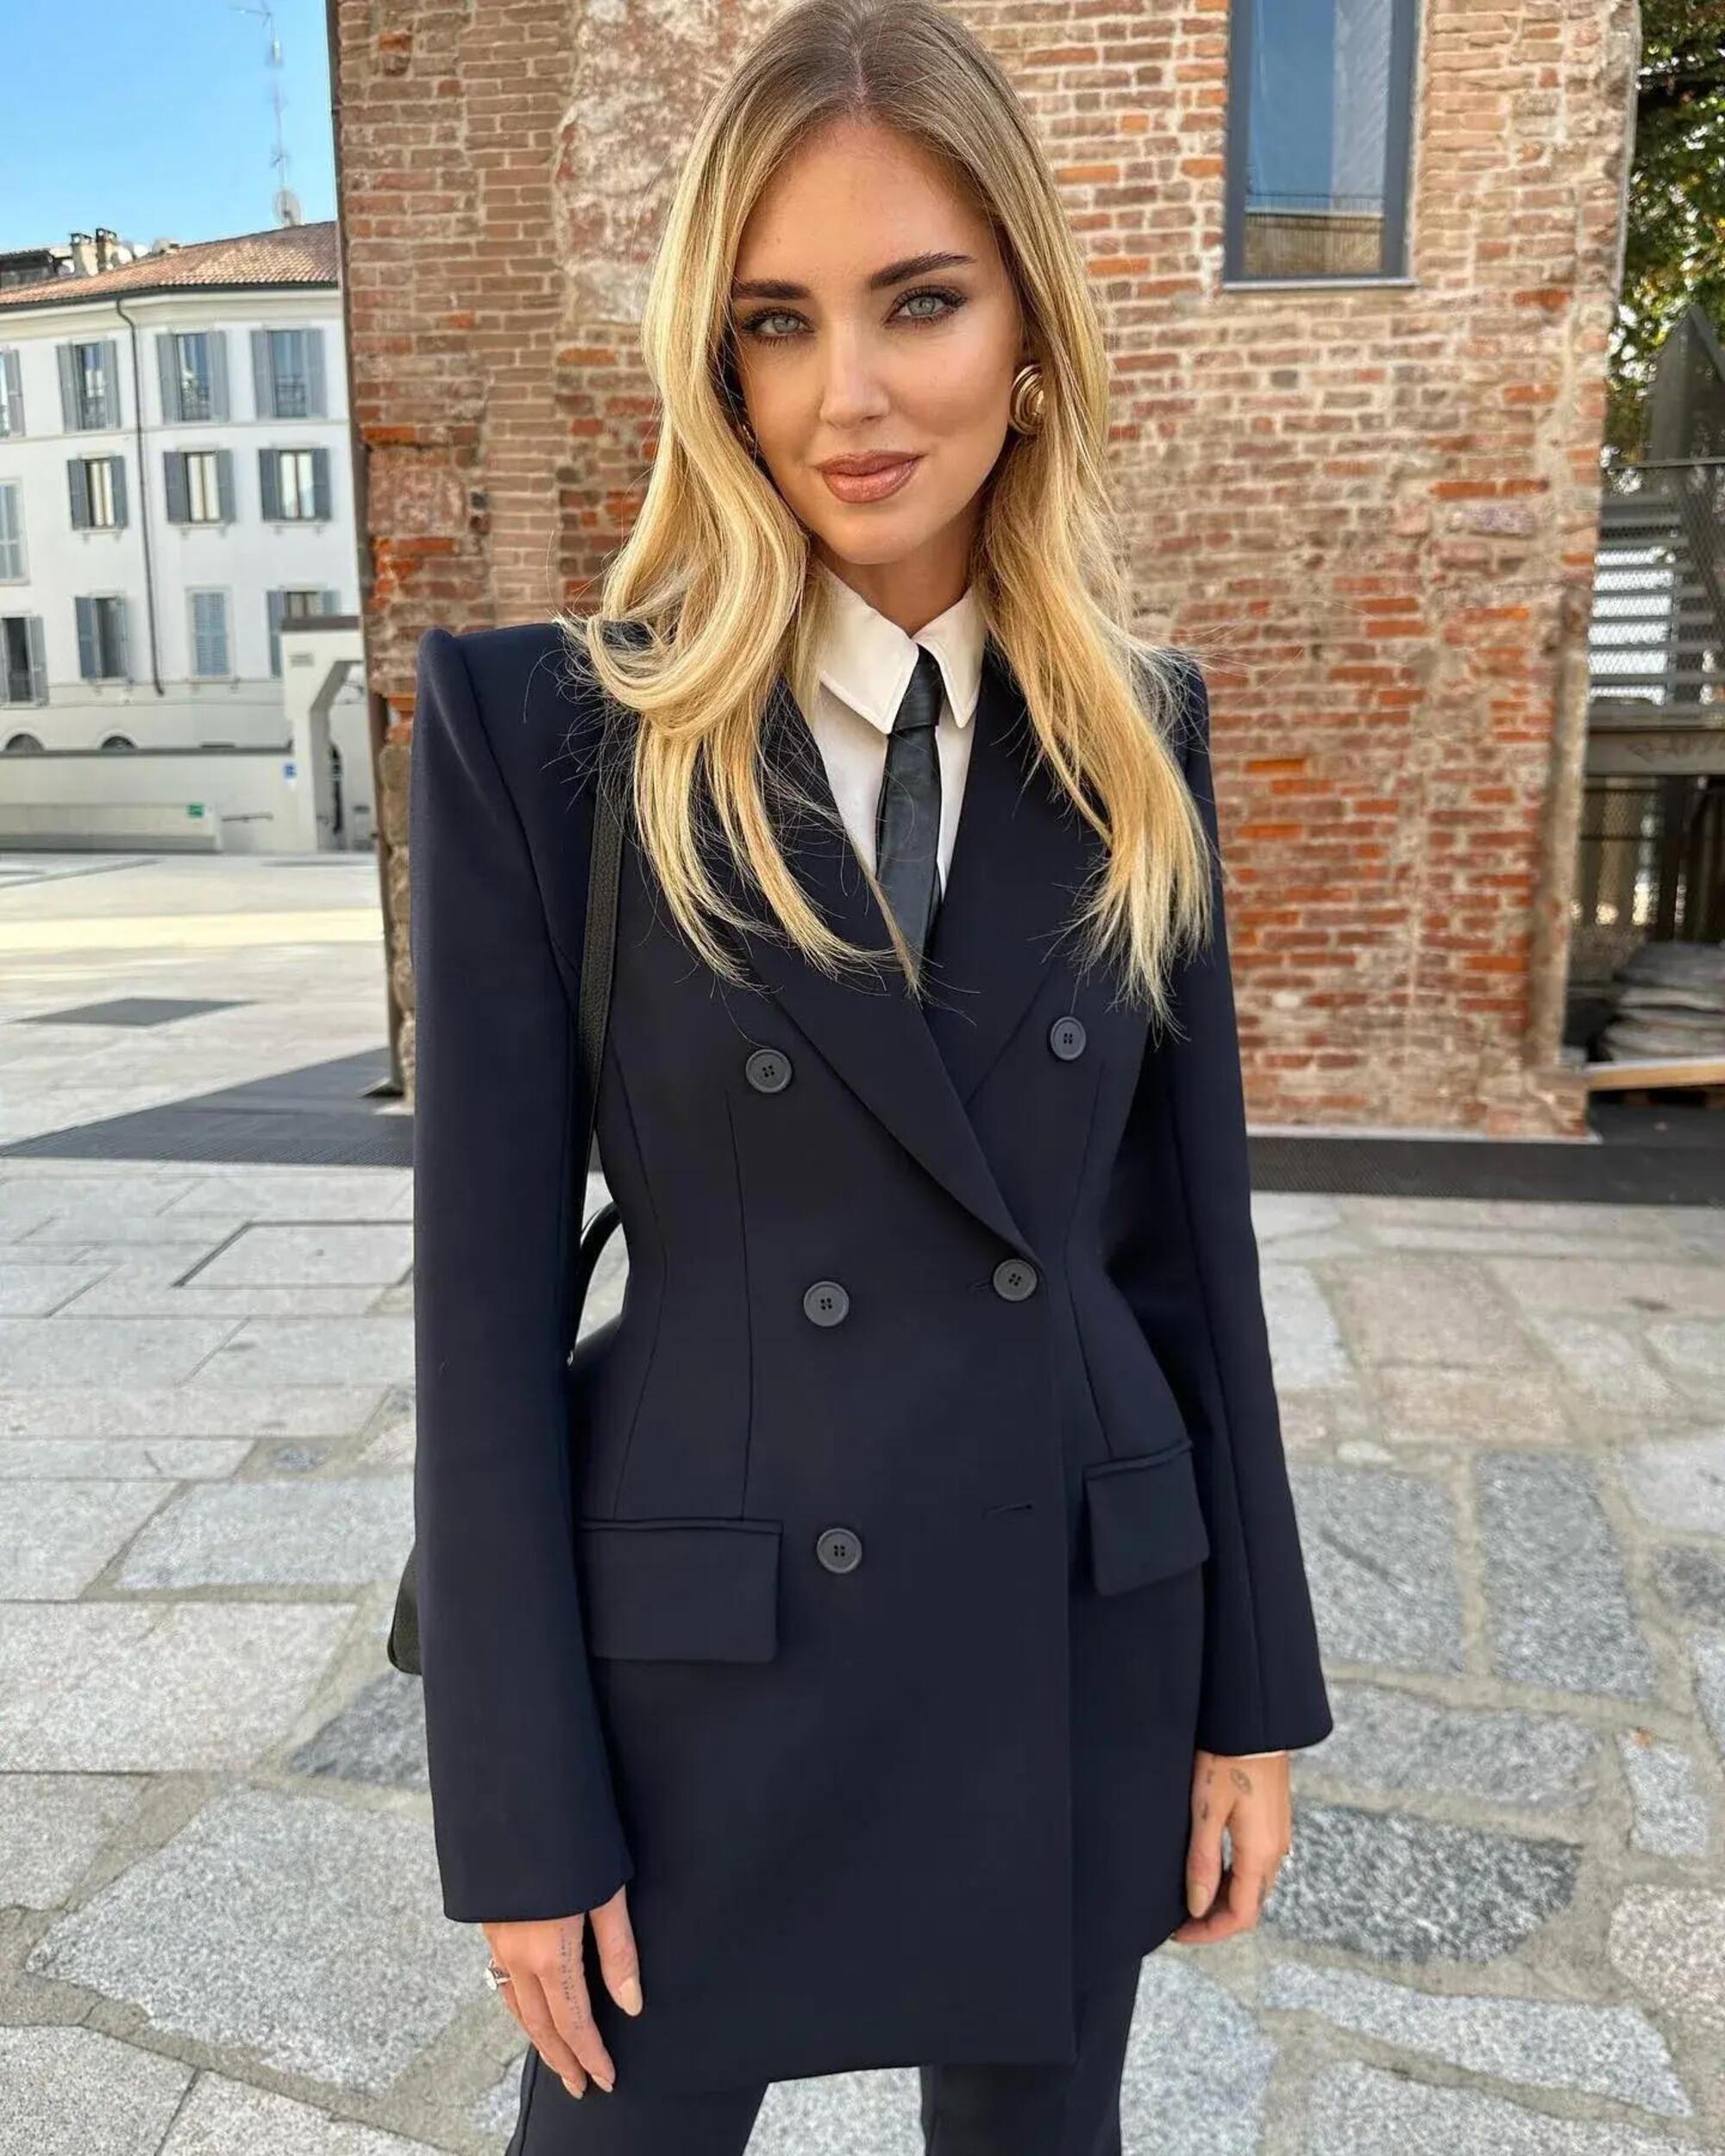 Chiara Ferragni in giacca e cravatta